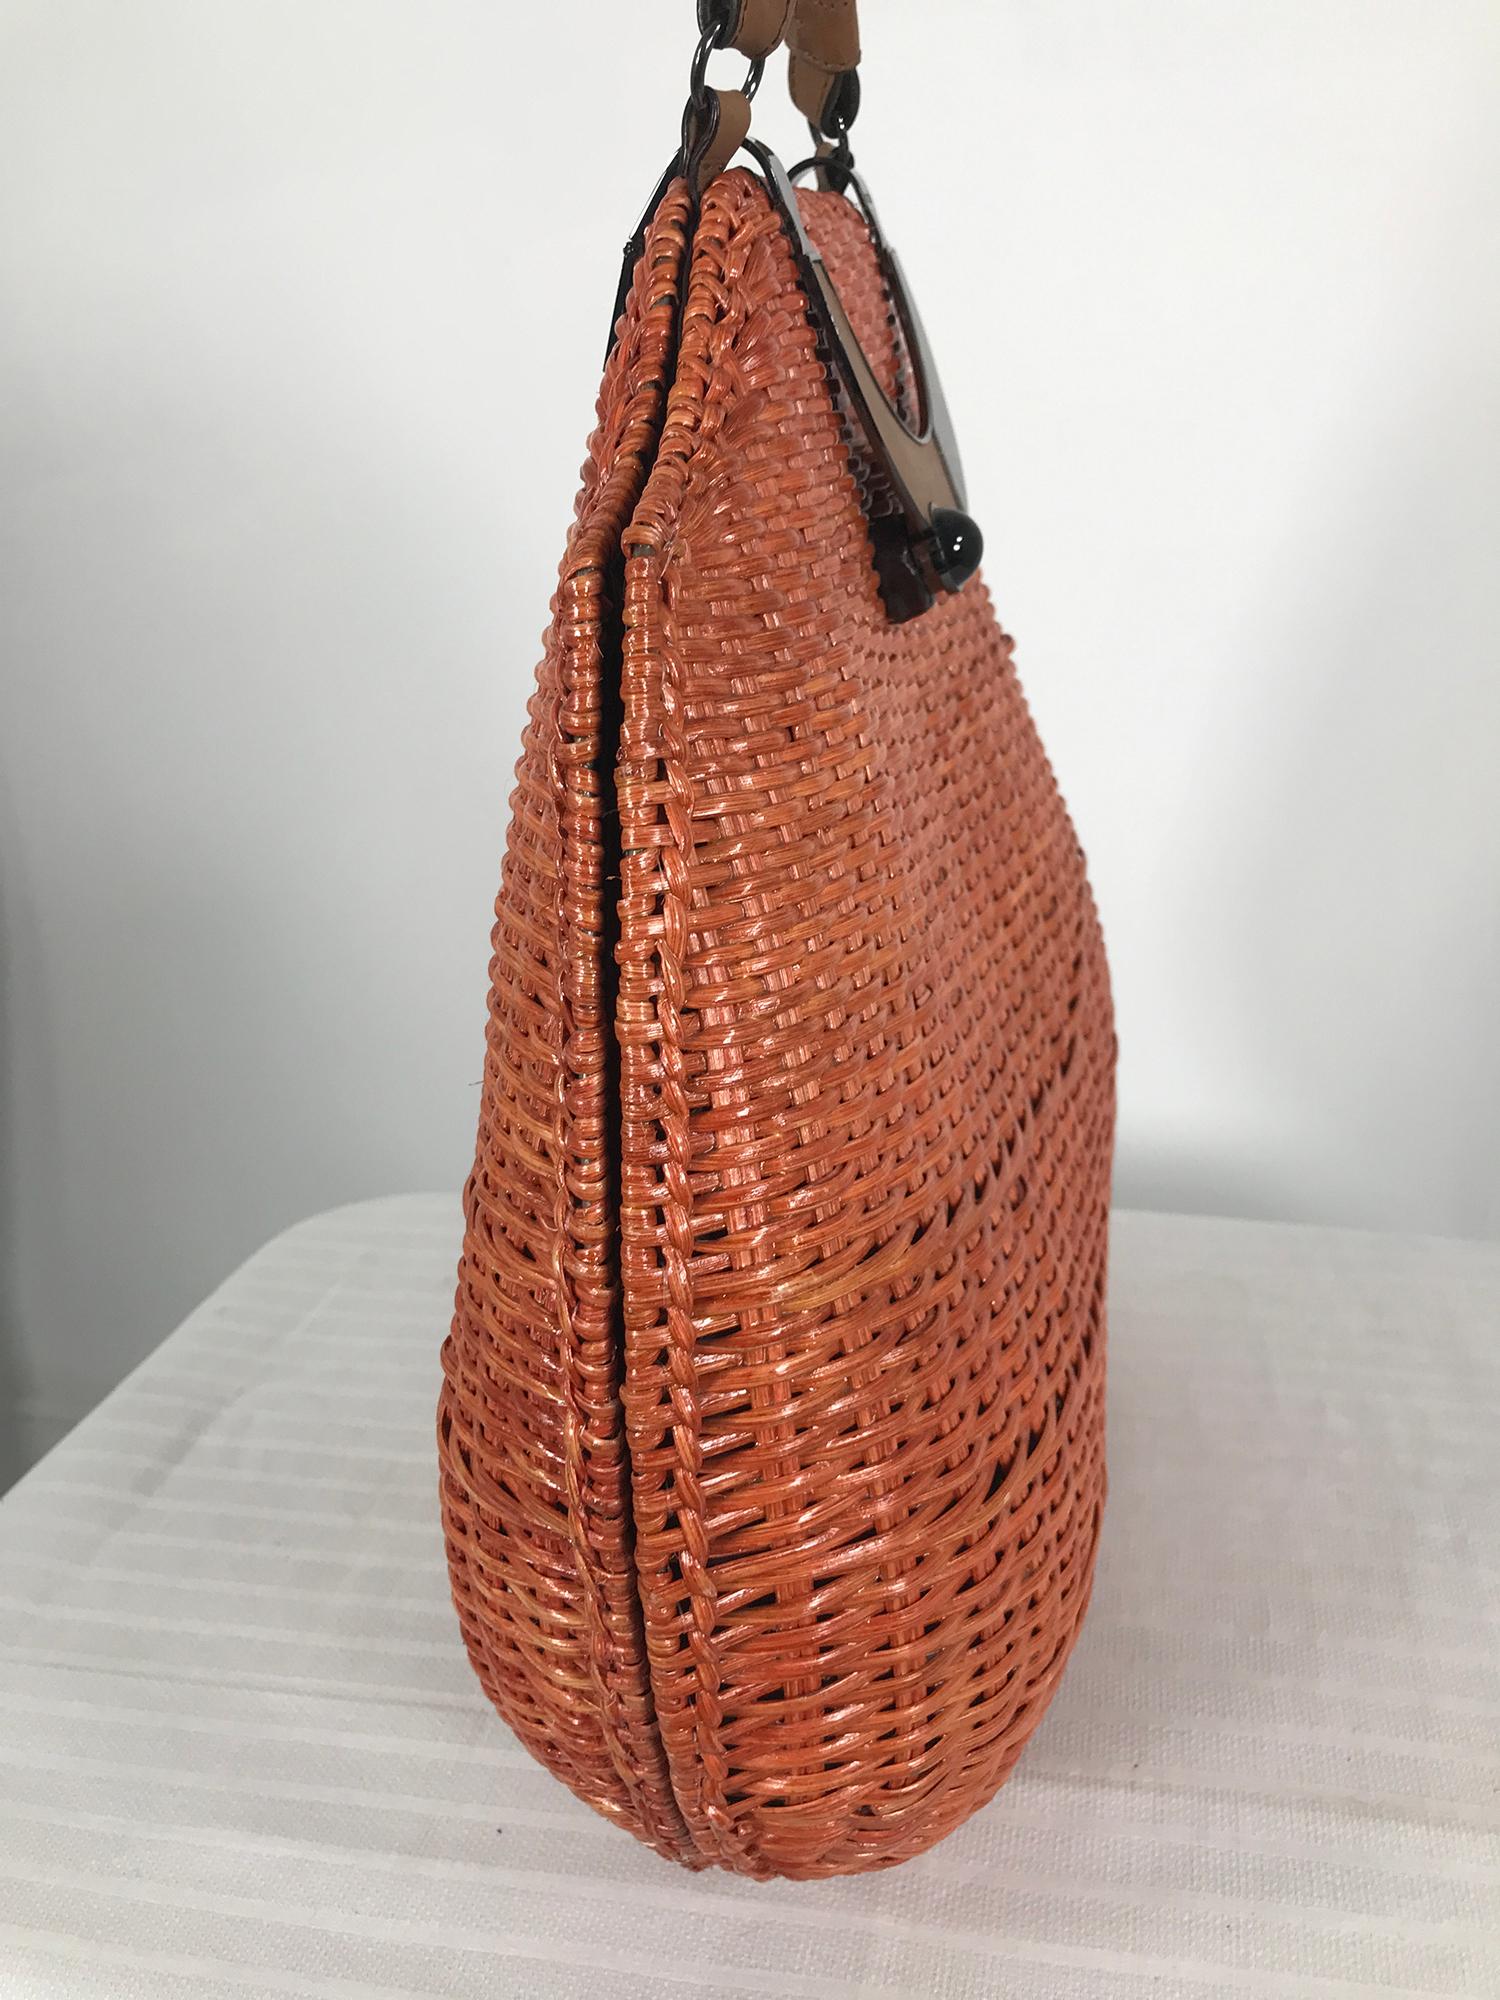 Sport Max Giant Orange Wicker Handbag Shoulder Bag In Good Condition For Sale In West Palm Beach, FL